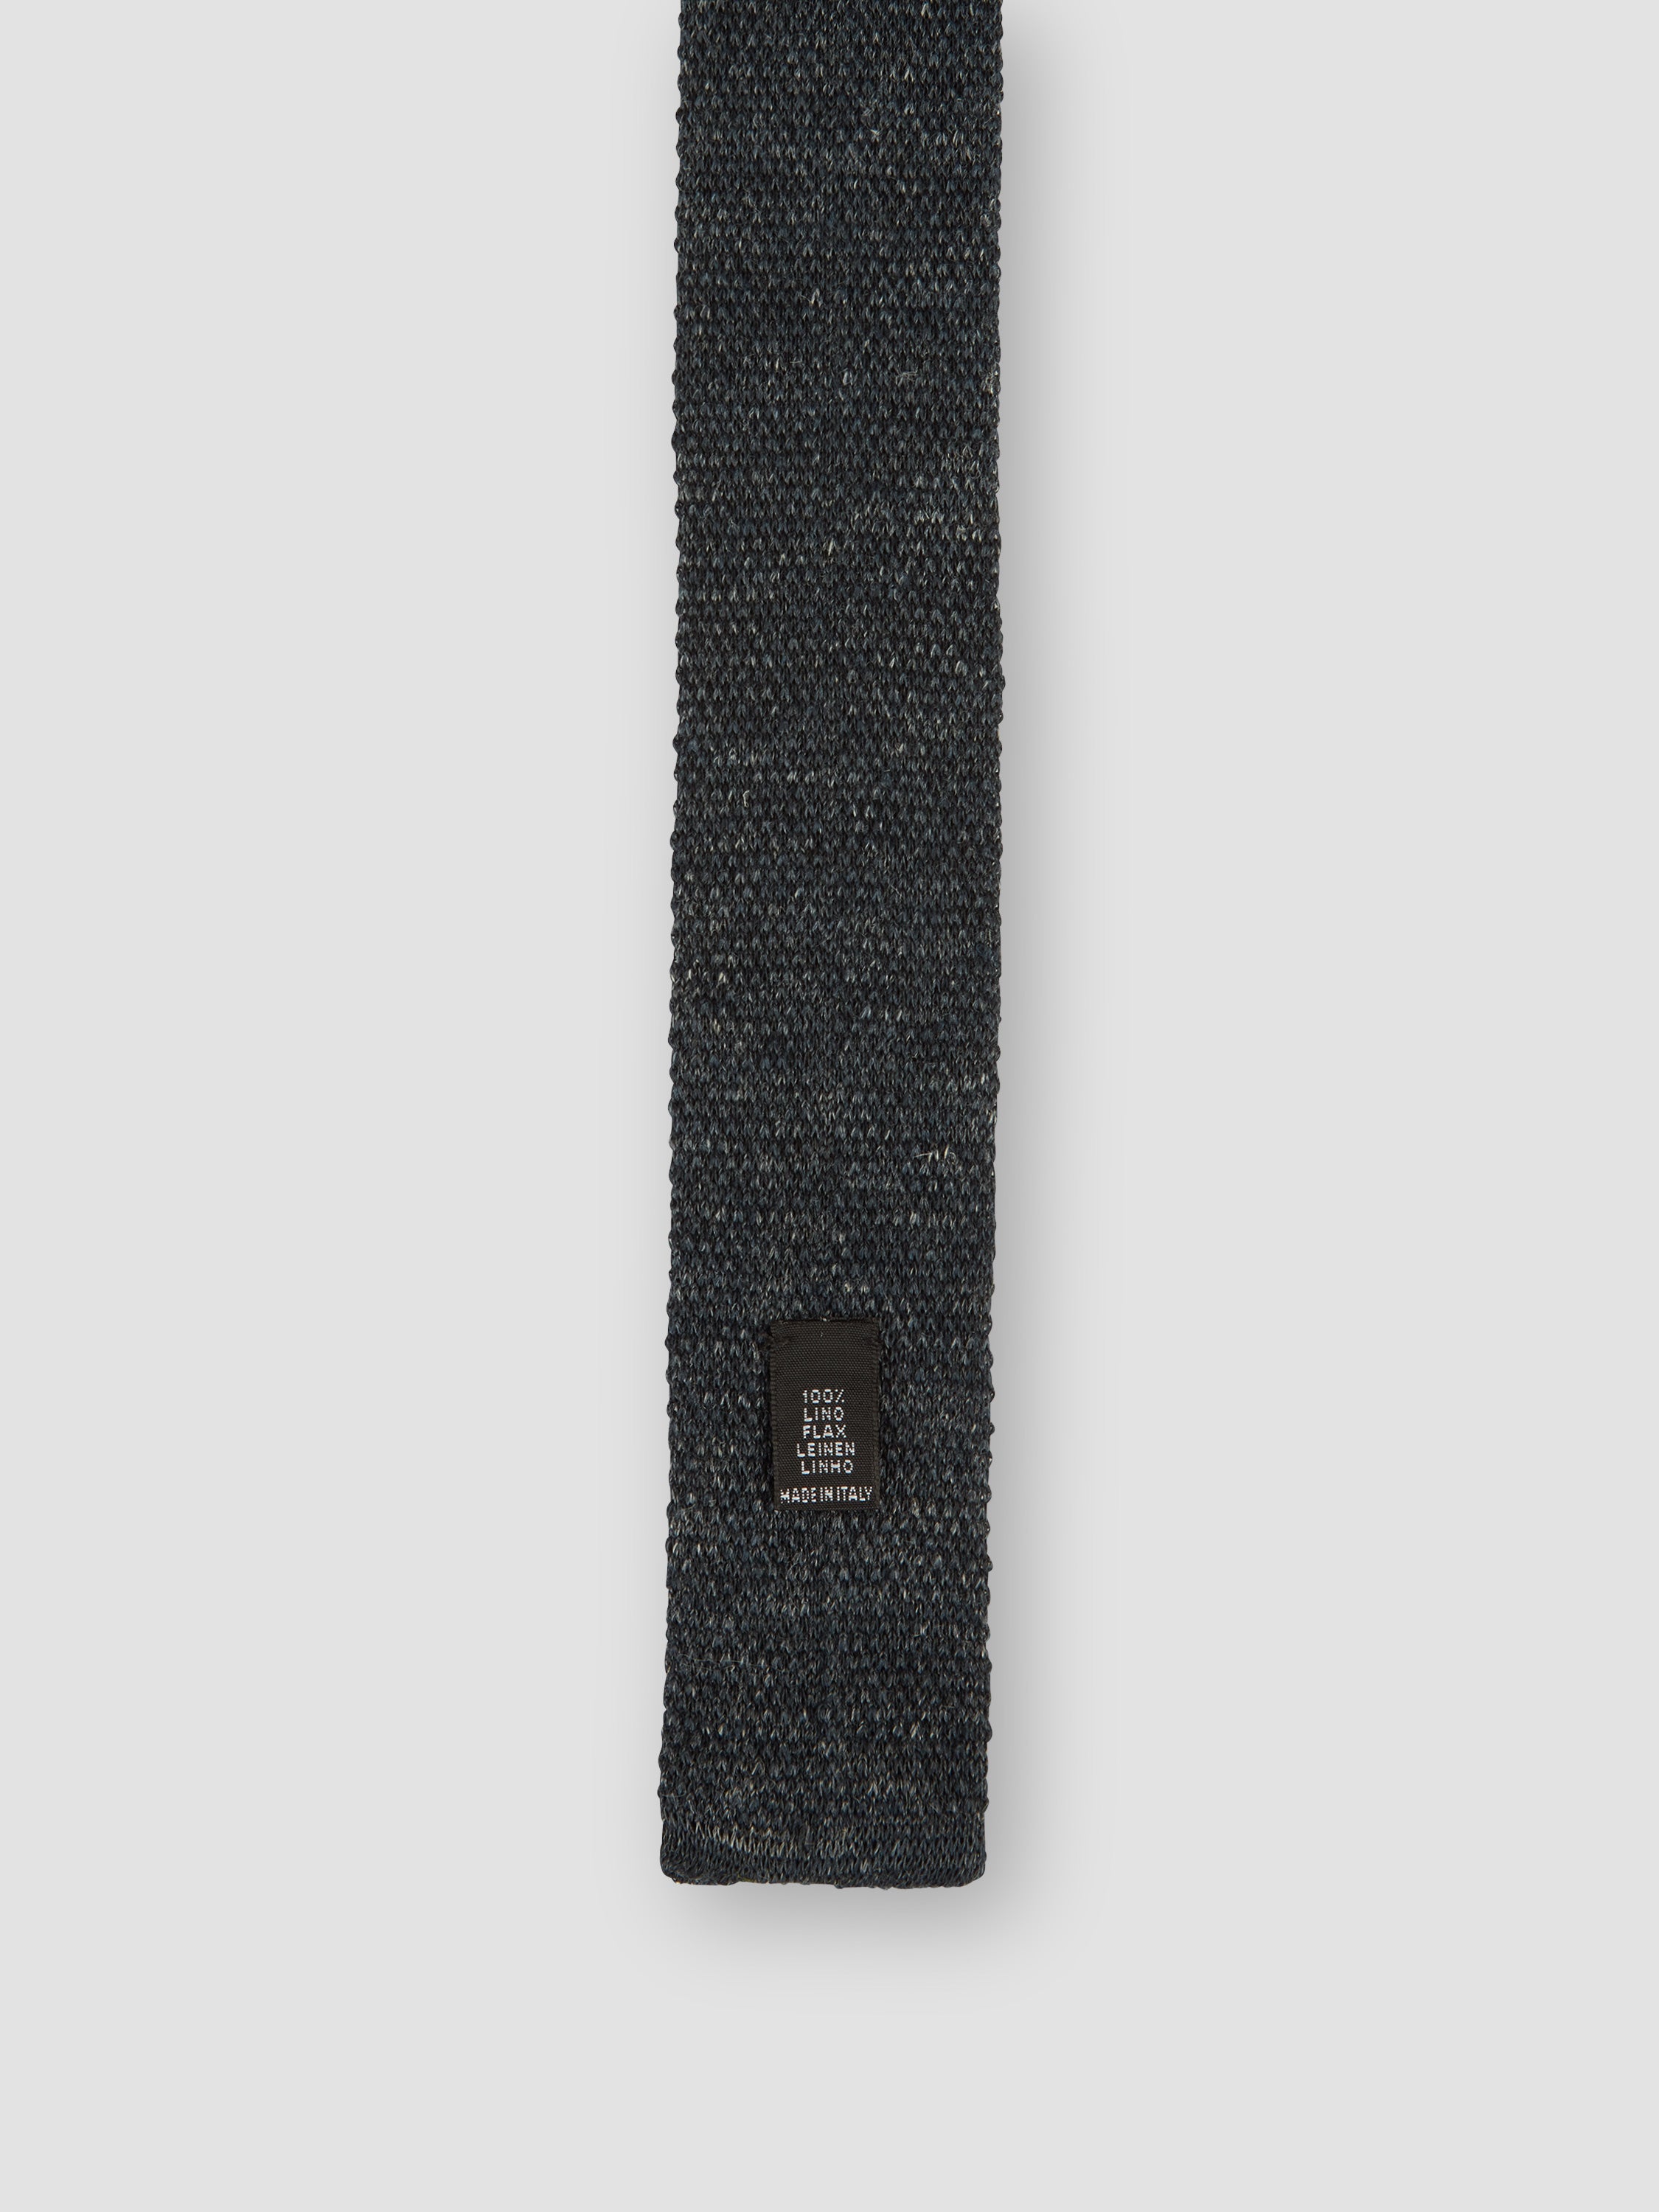 Knitted Linen Tie Darkest Navy Product Label